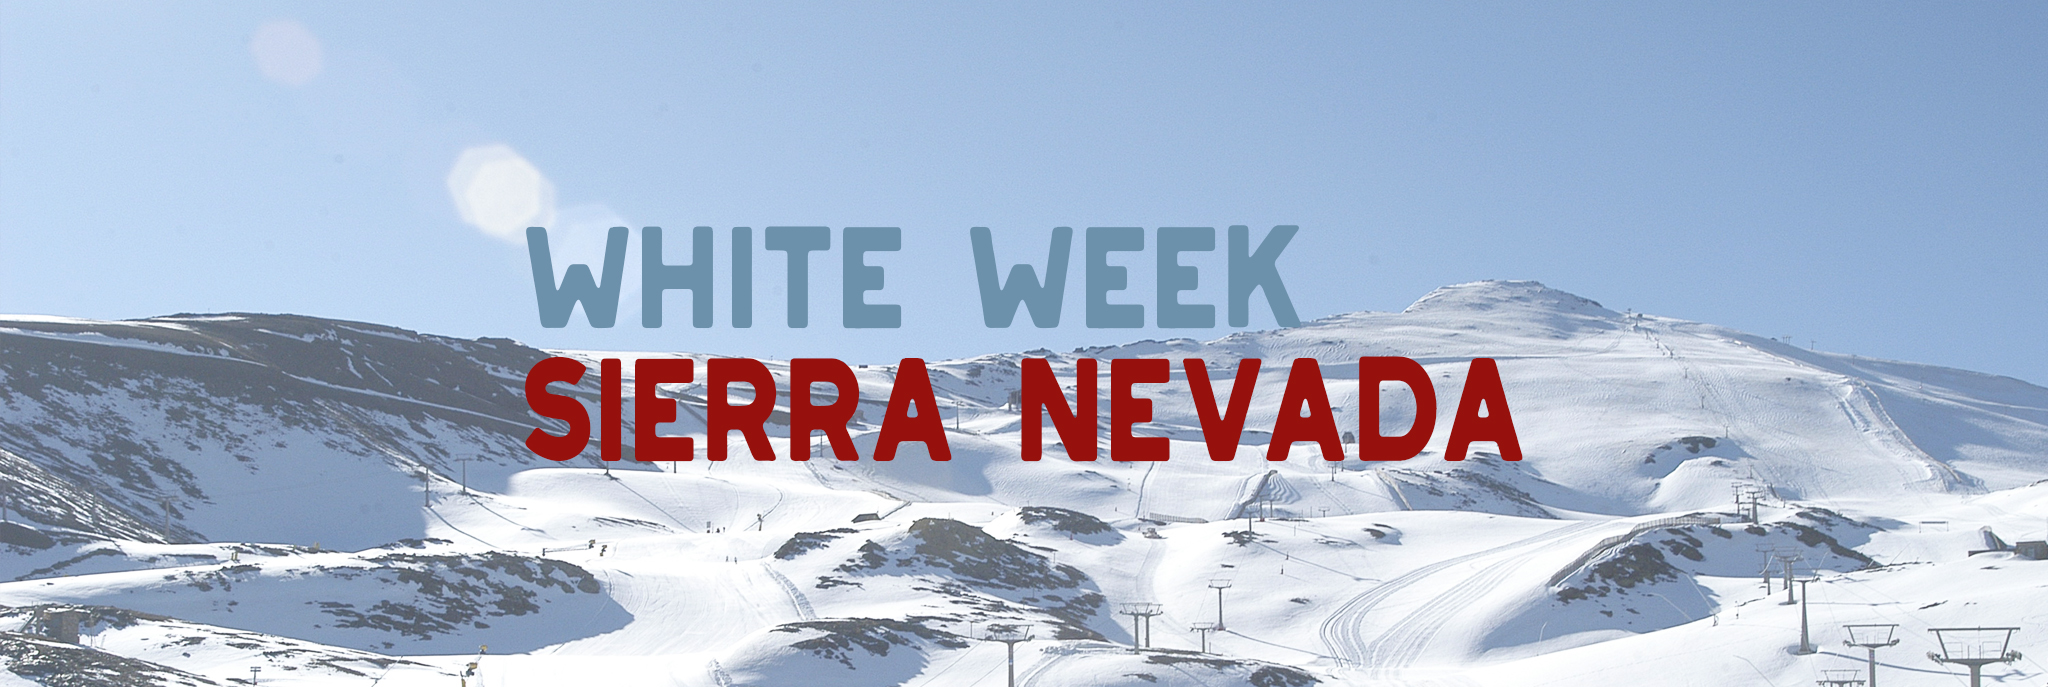 white-week-sierra-nevada